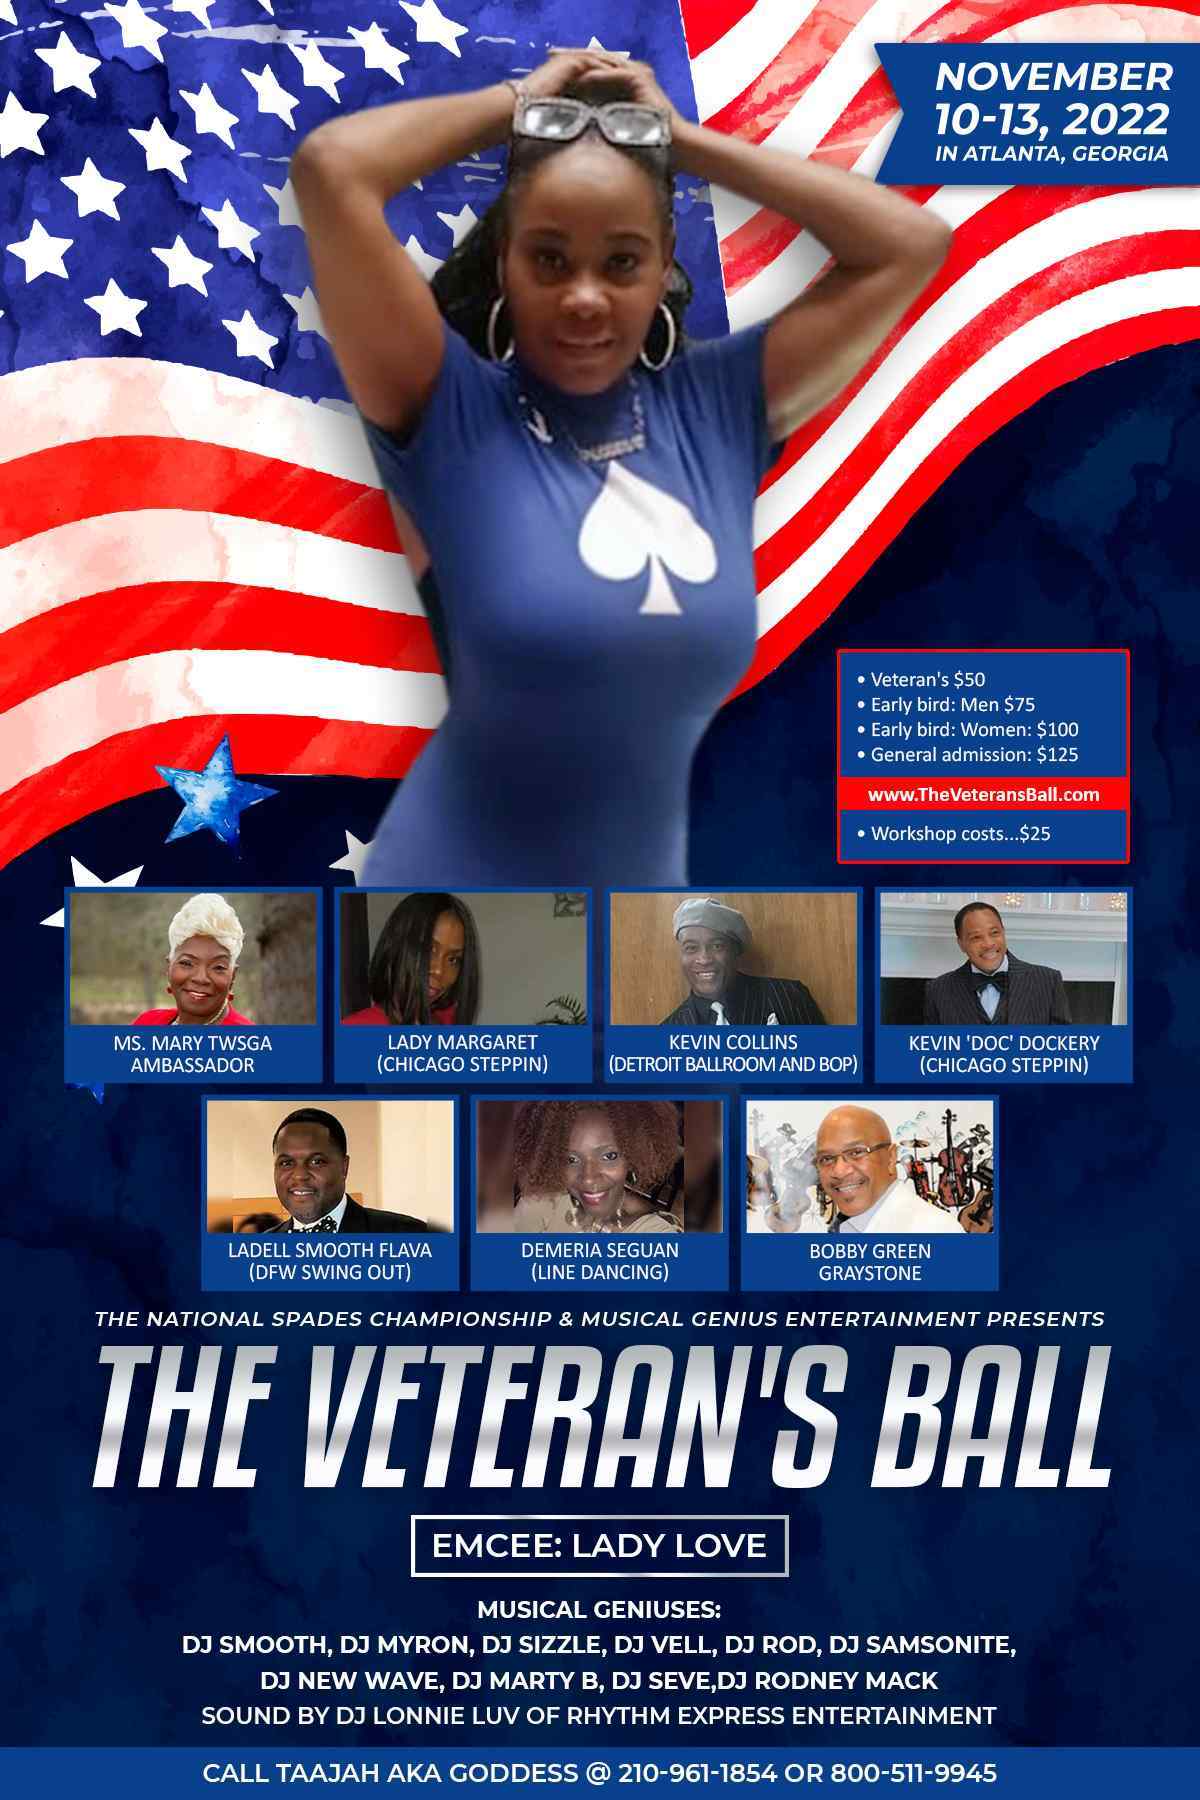 The National Spades Championship Presents The Veteran's Ball